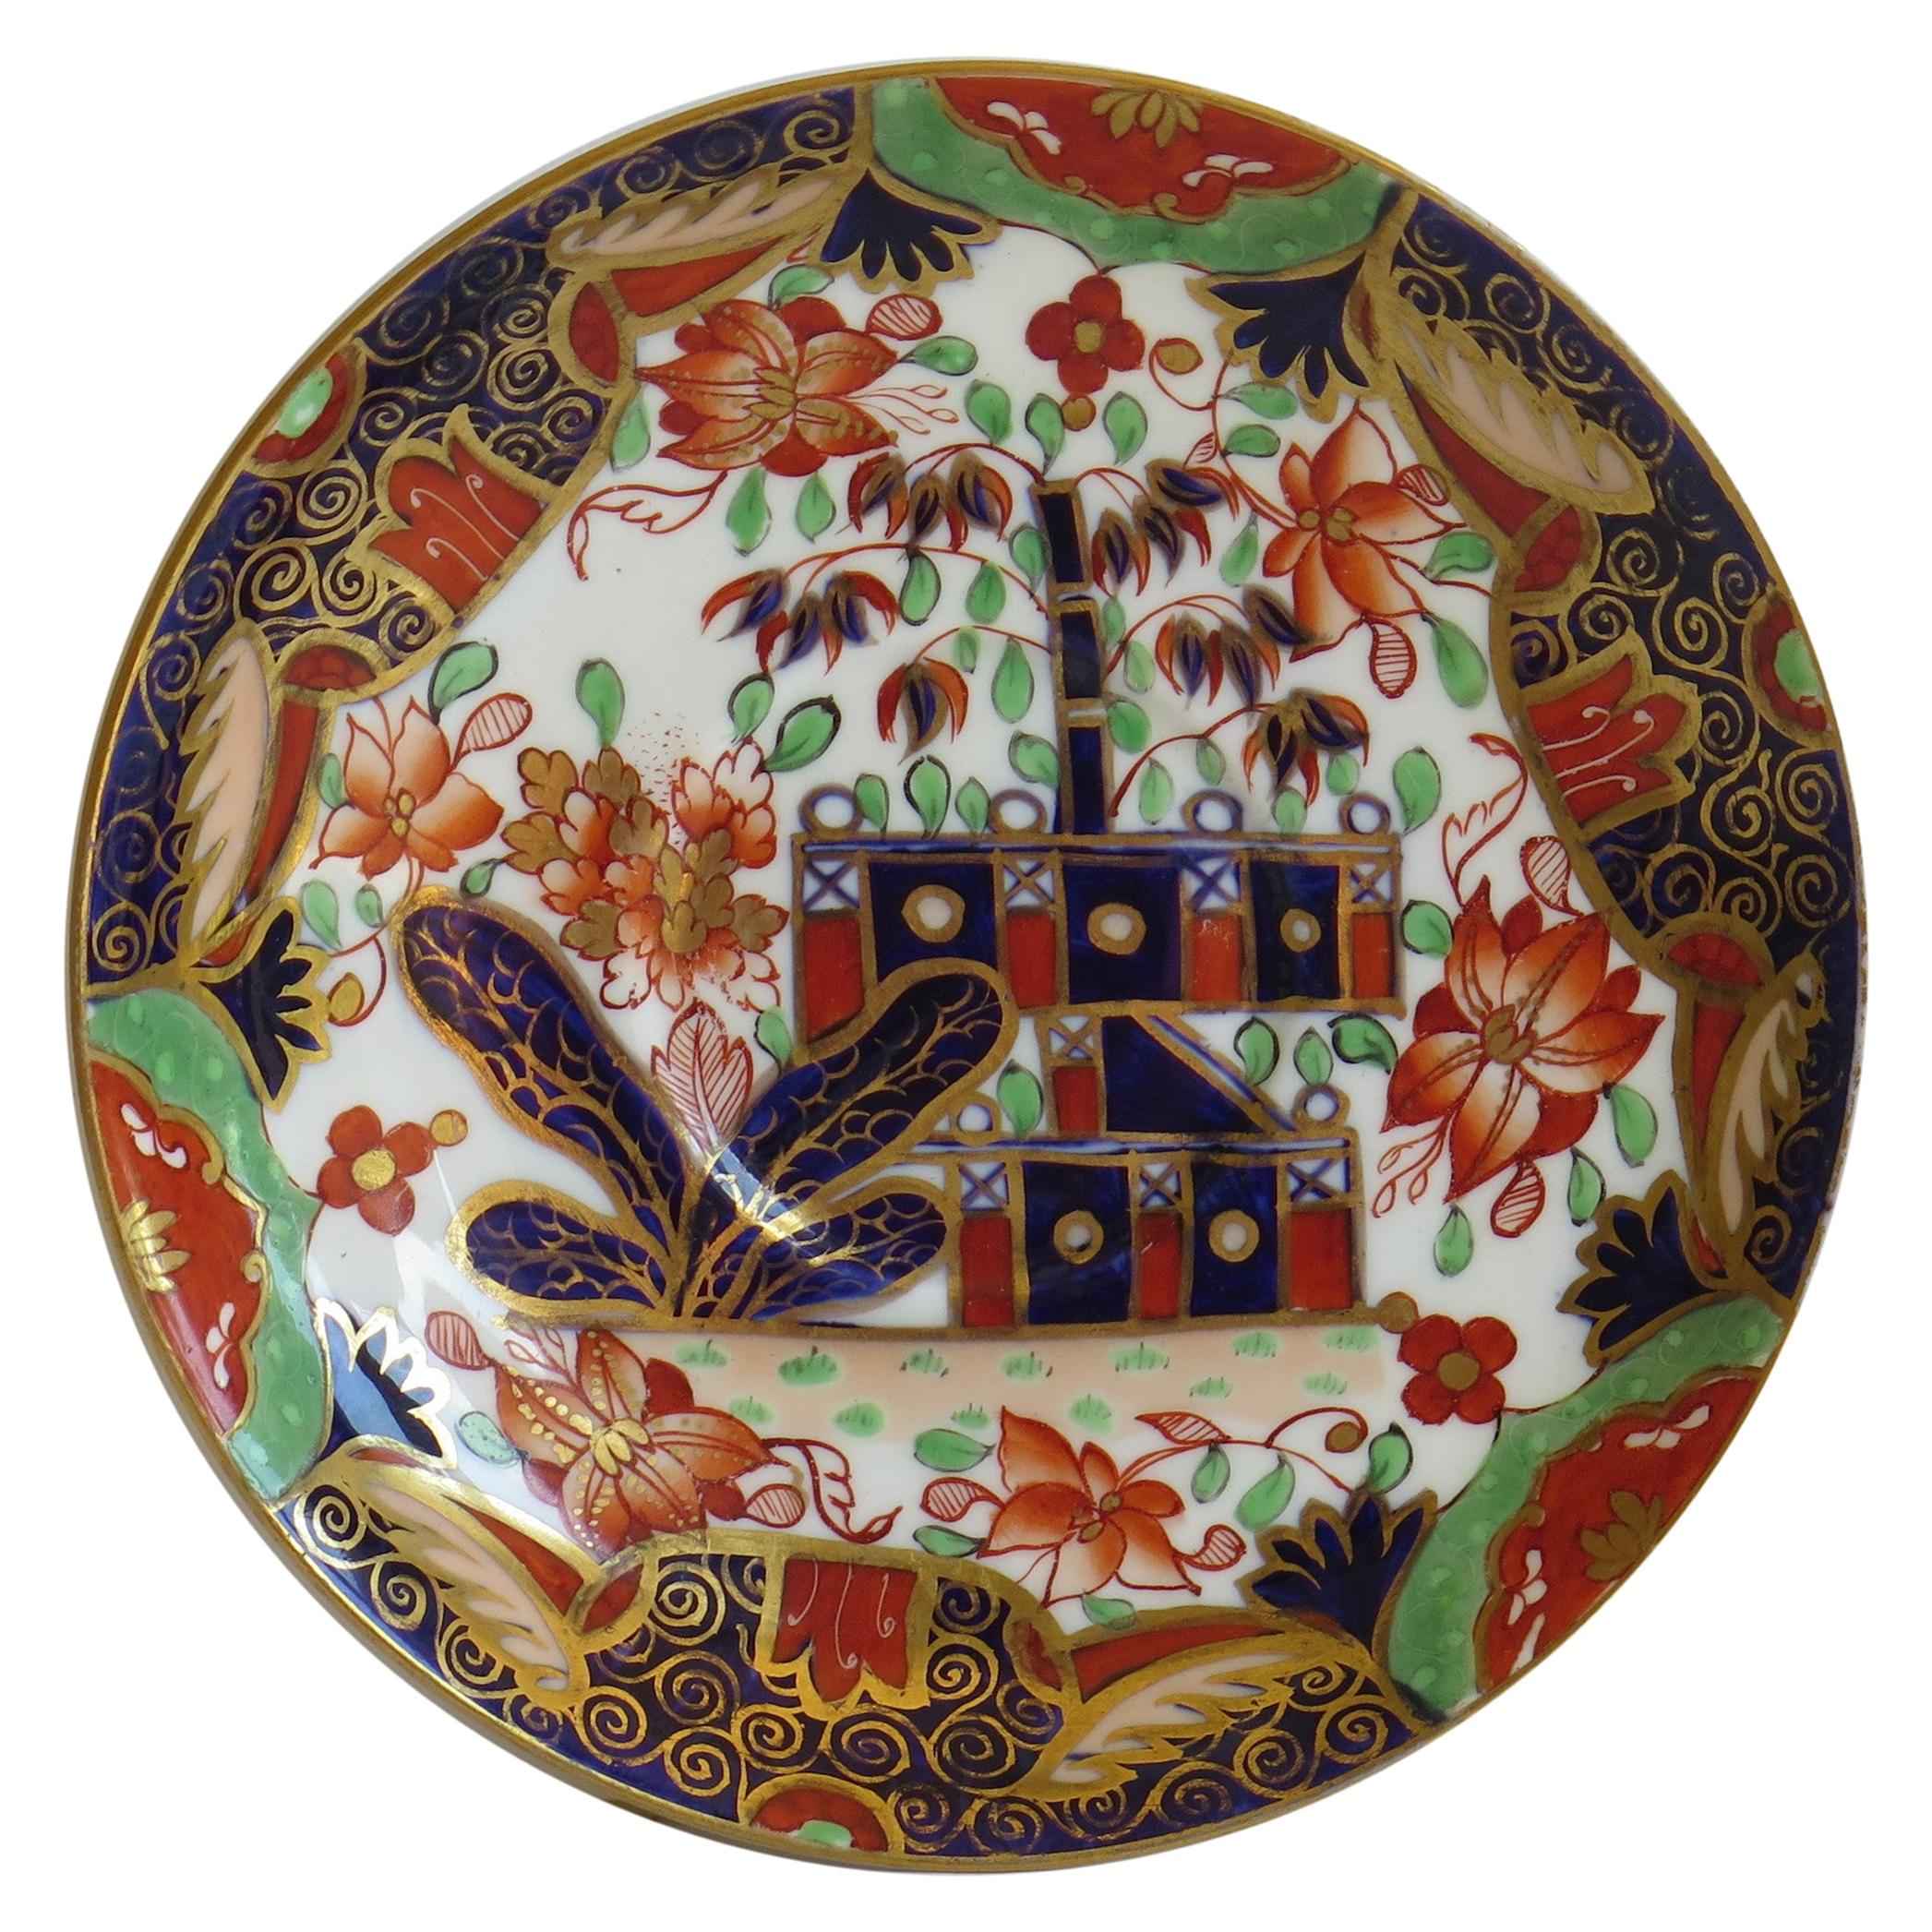 Porcelain Saucer Dish by Copeland 'Spode' in Imari Fence Ptn No. 794, circa 1850